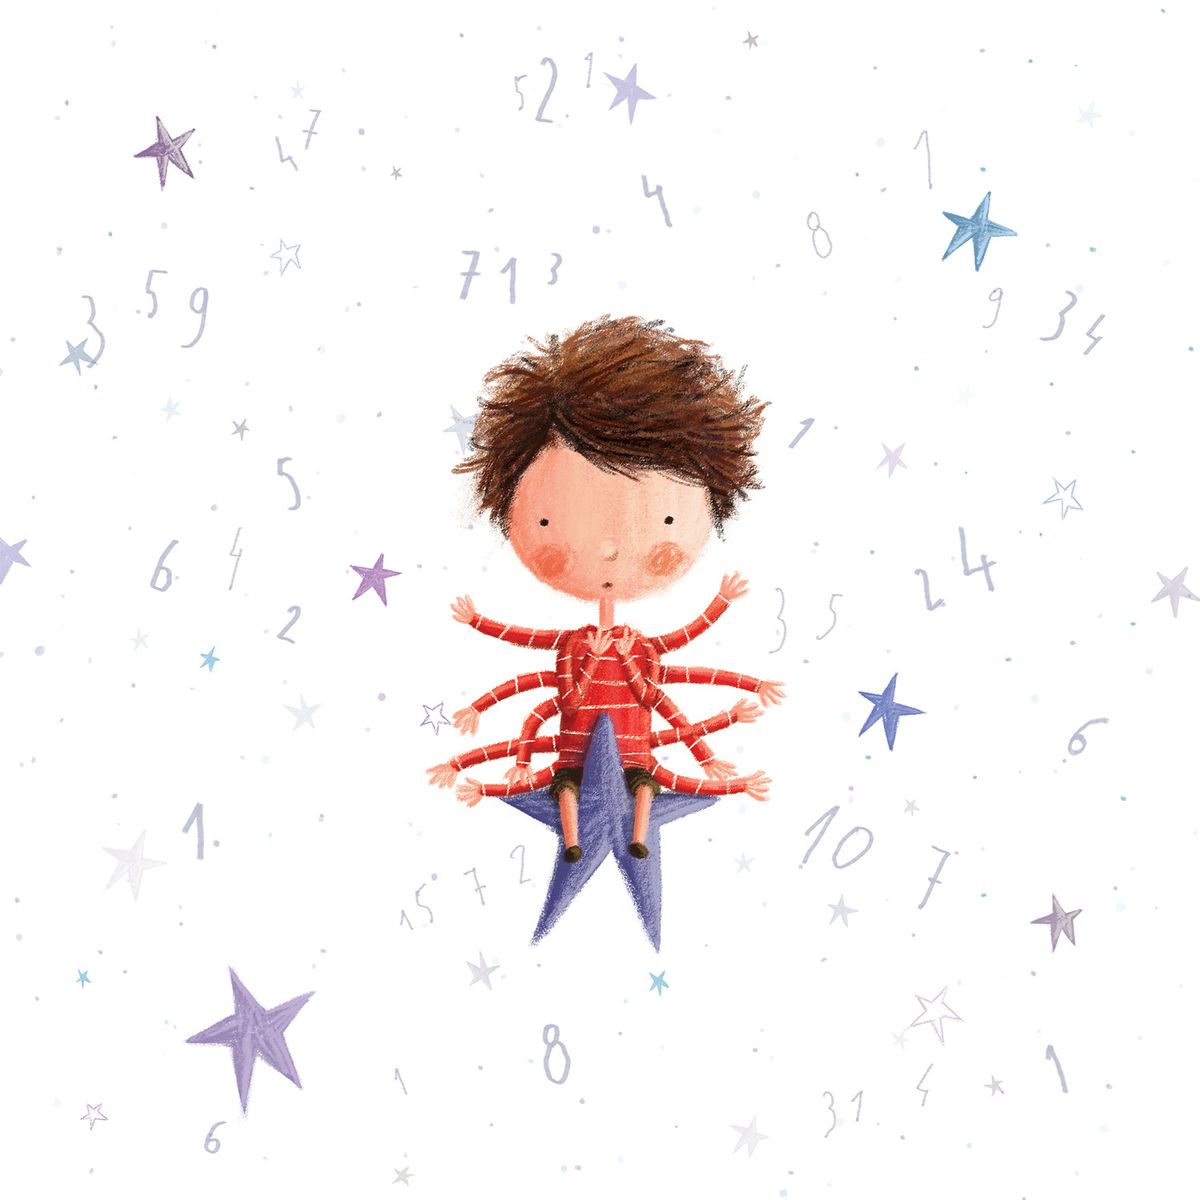 Star Child Book Illustration 4